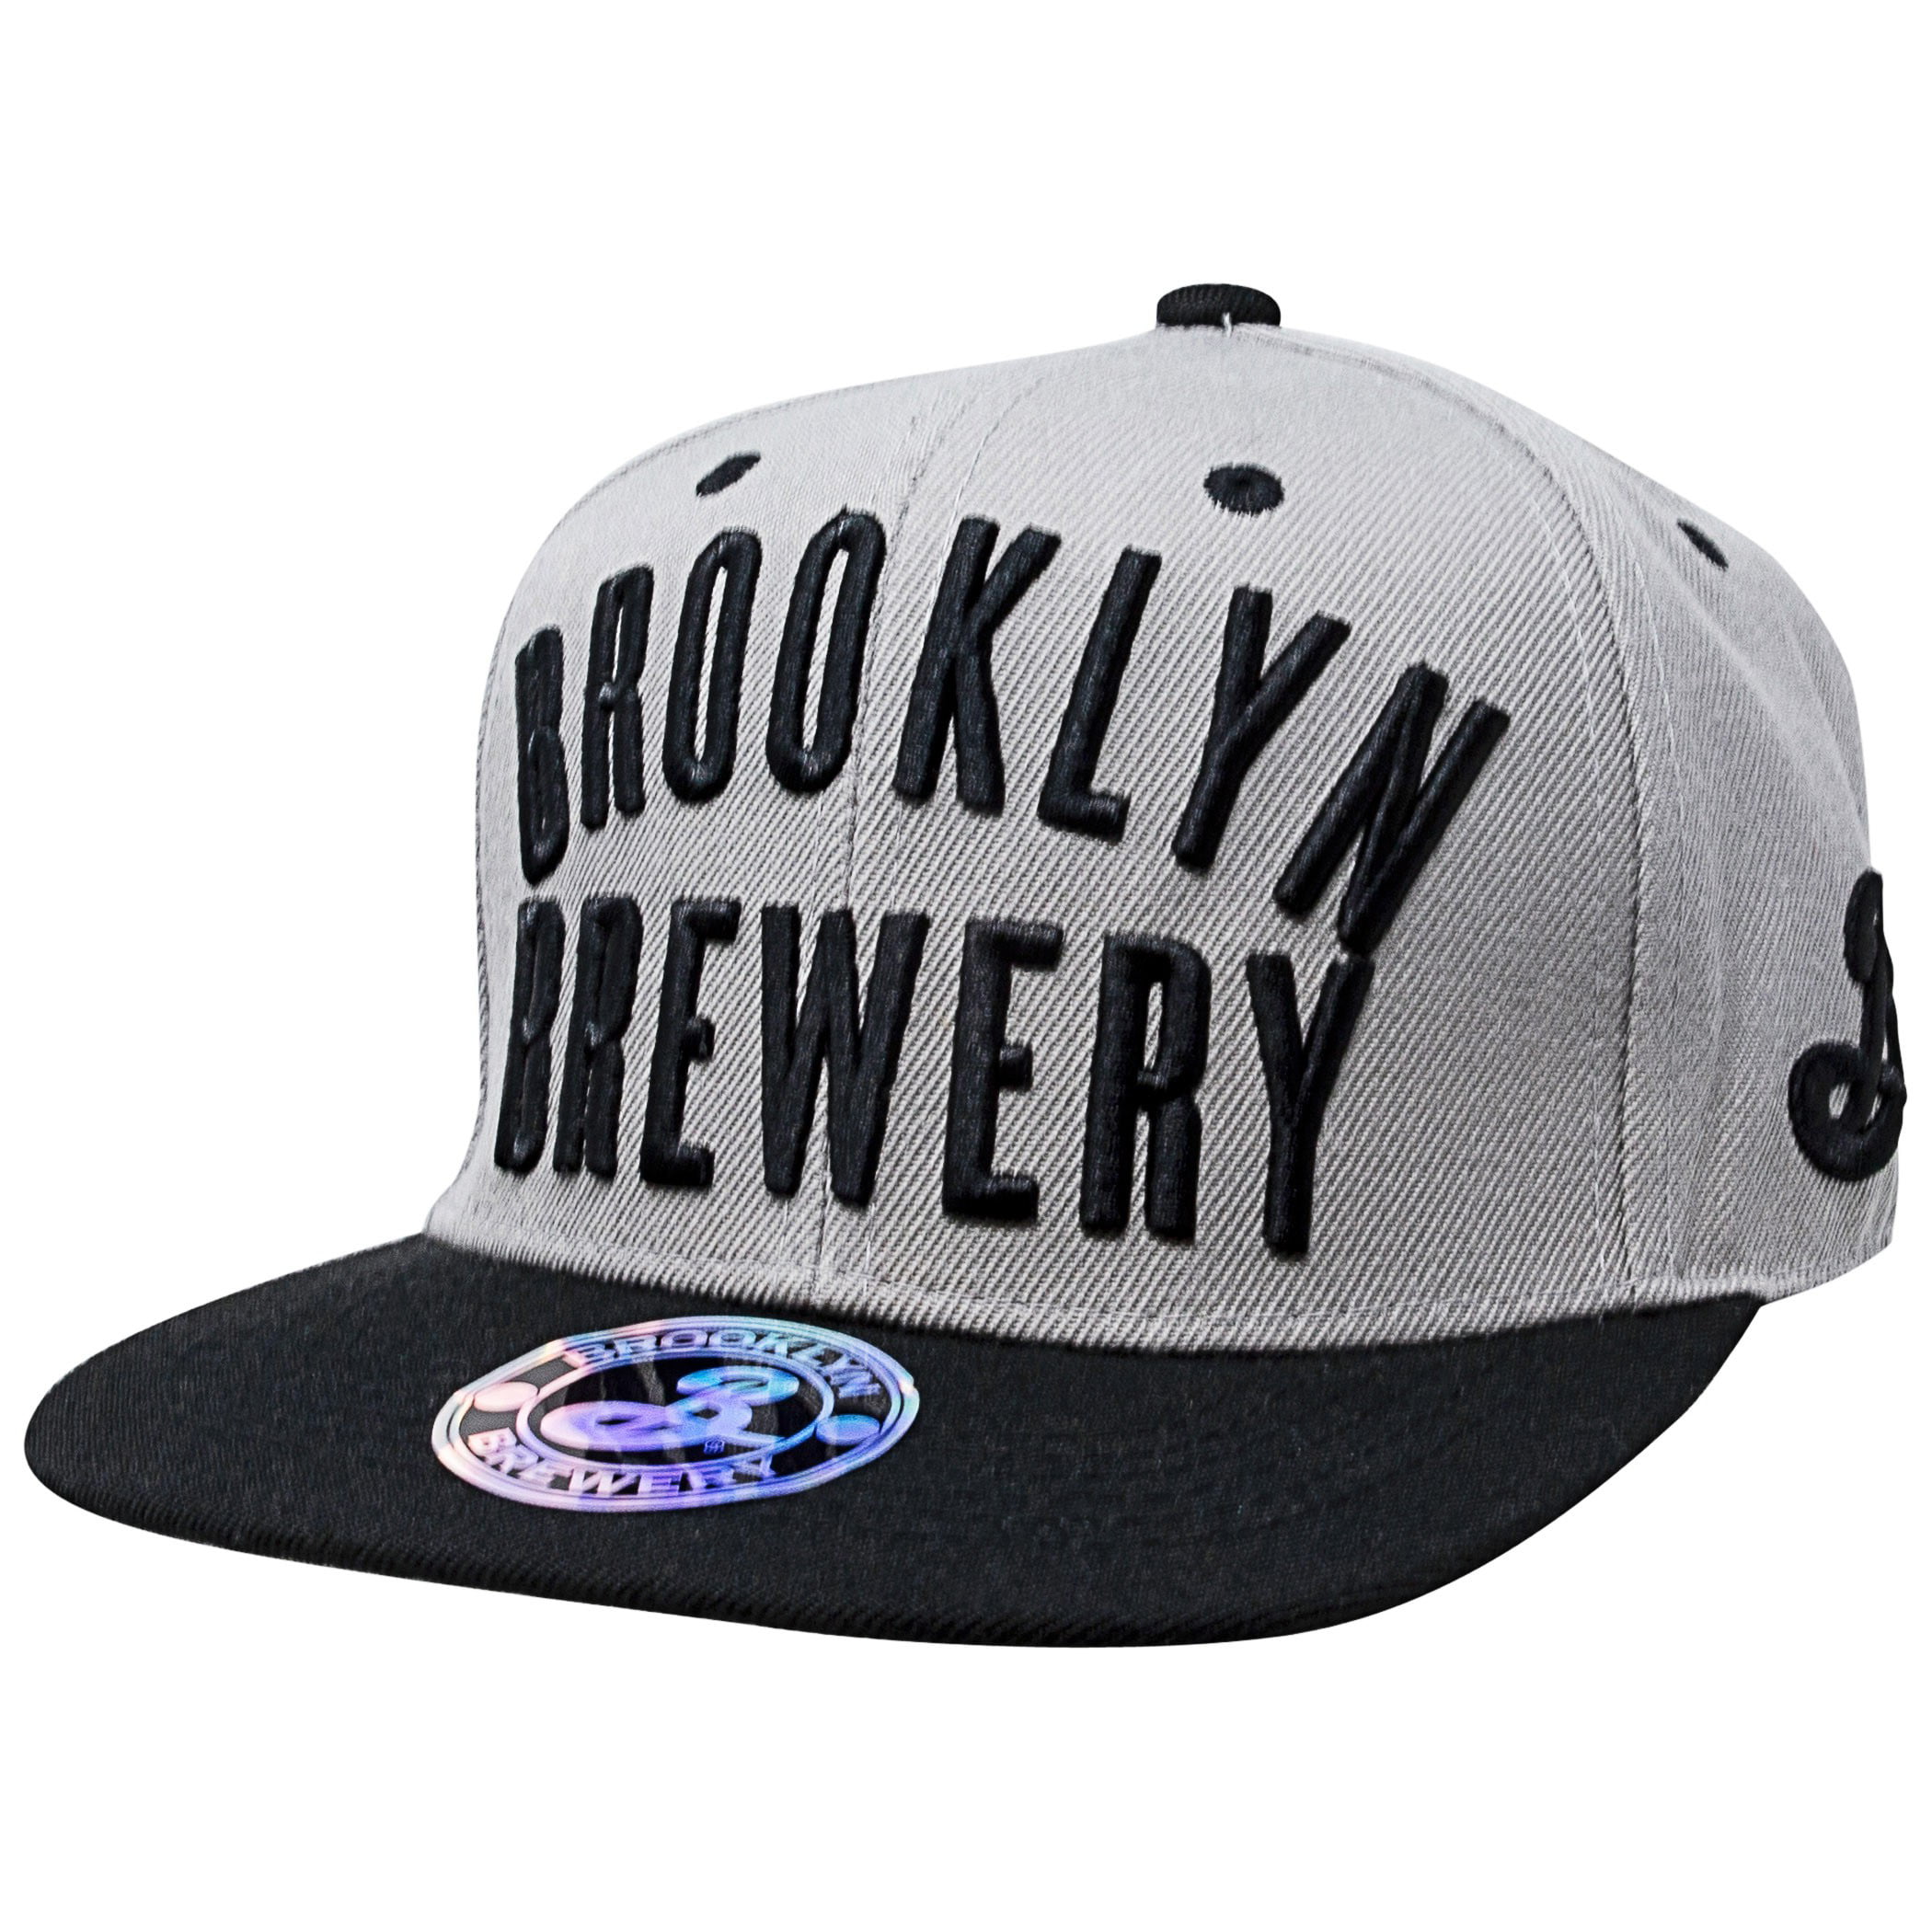 Brooklyn Brewery Snapback Hat Black 